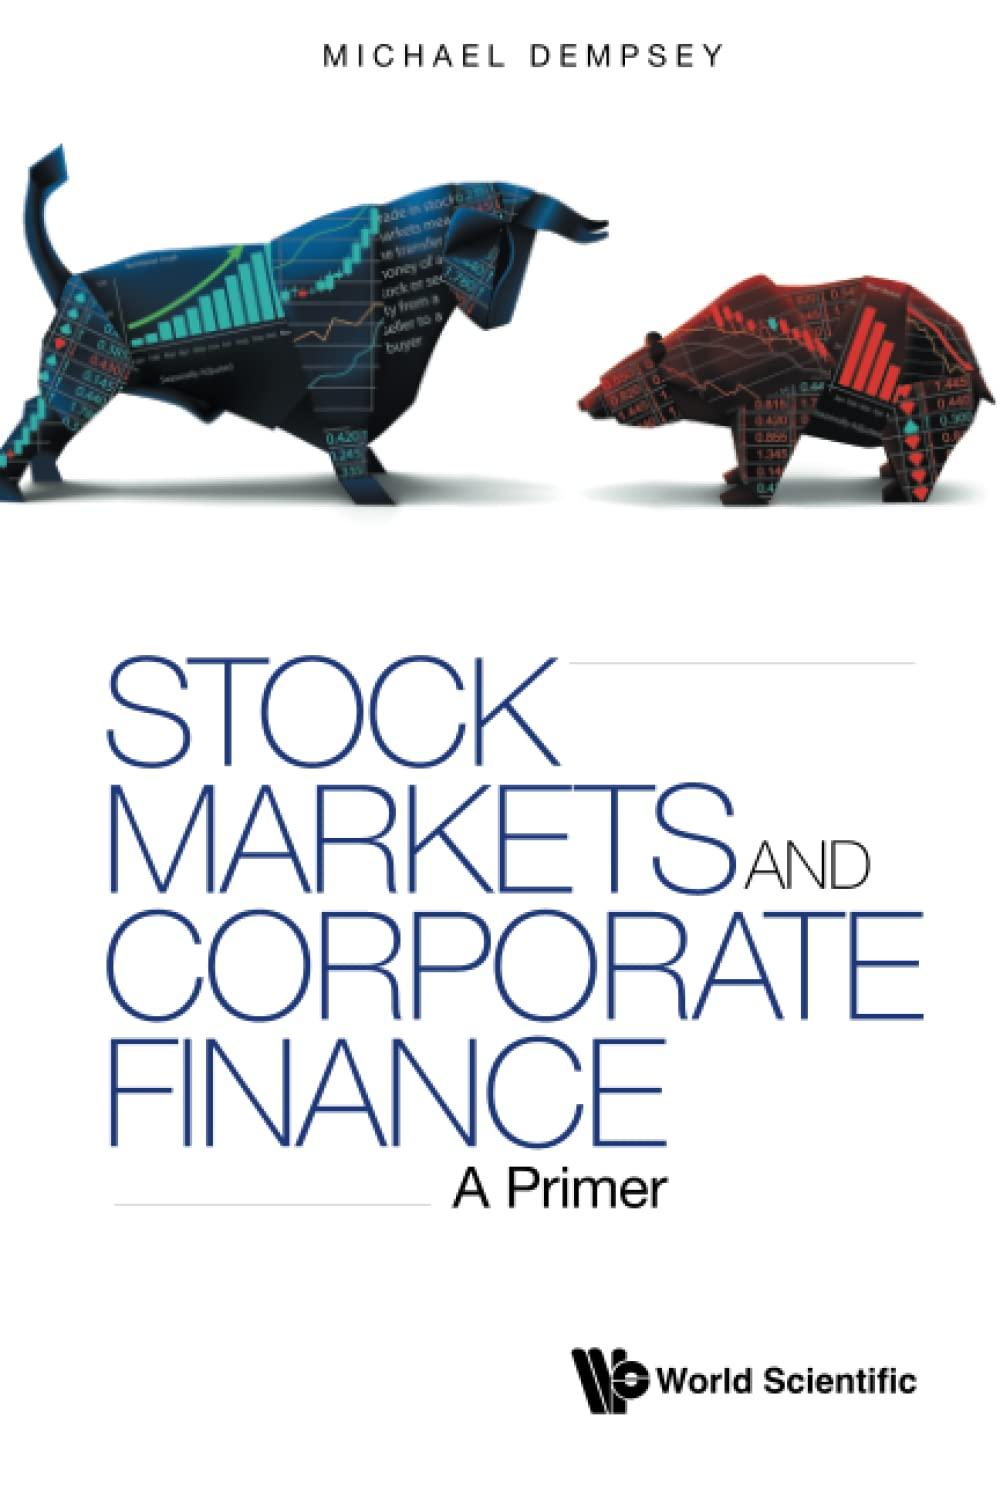 stock markets and corporate finance a primer 1st edition michael joseph dempsey 1800611609, 978-1800611603